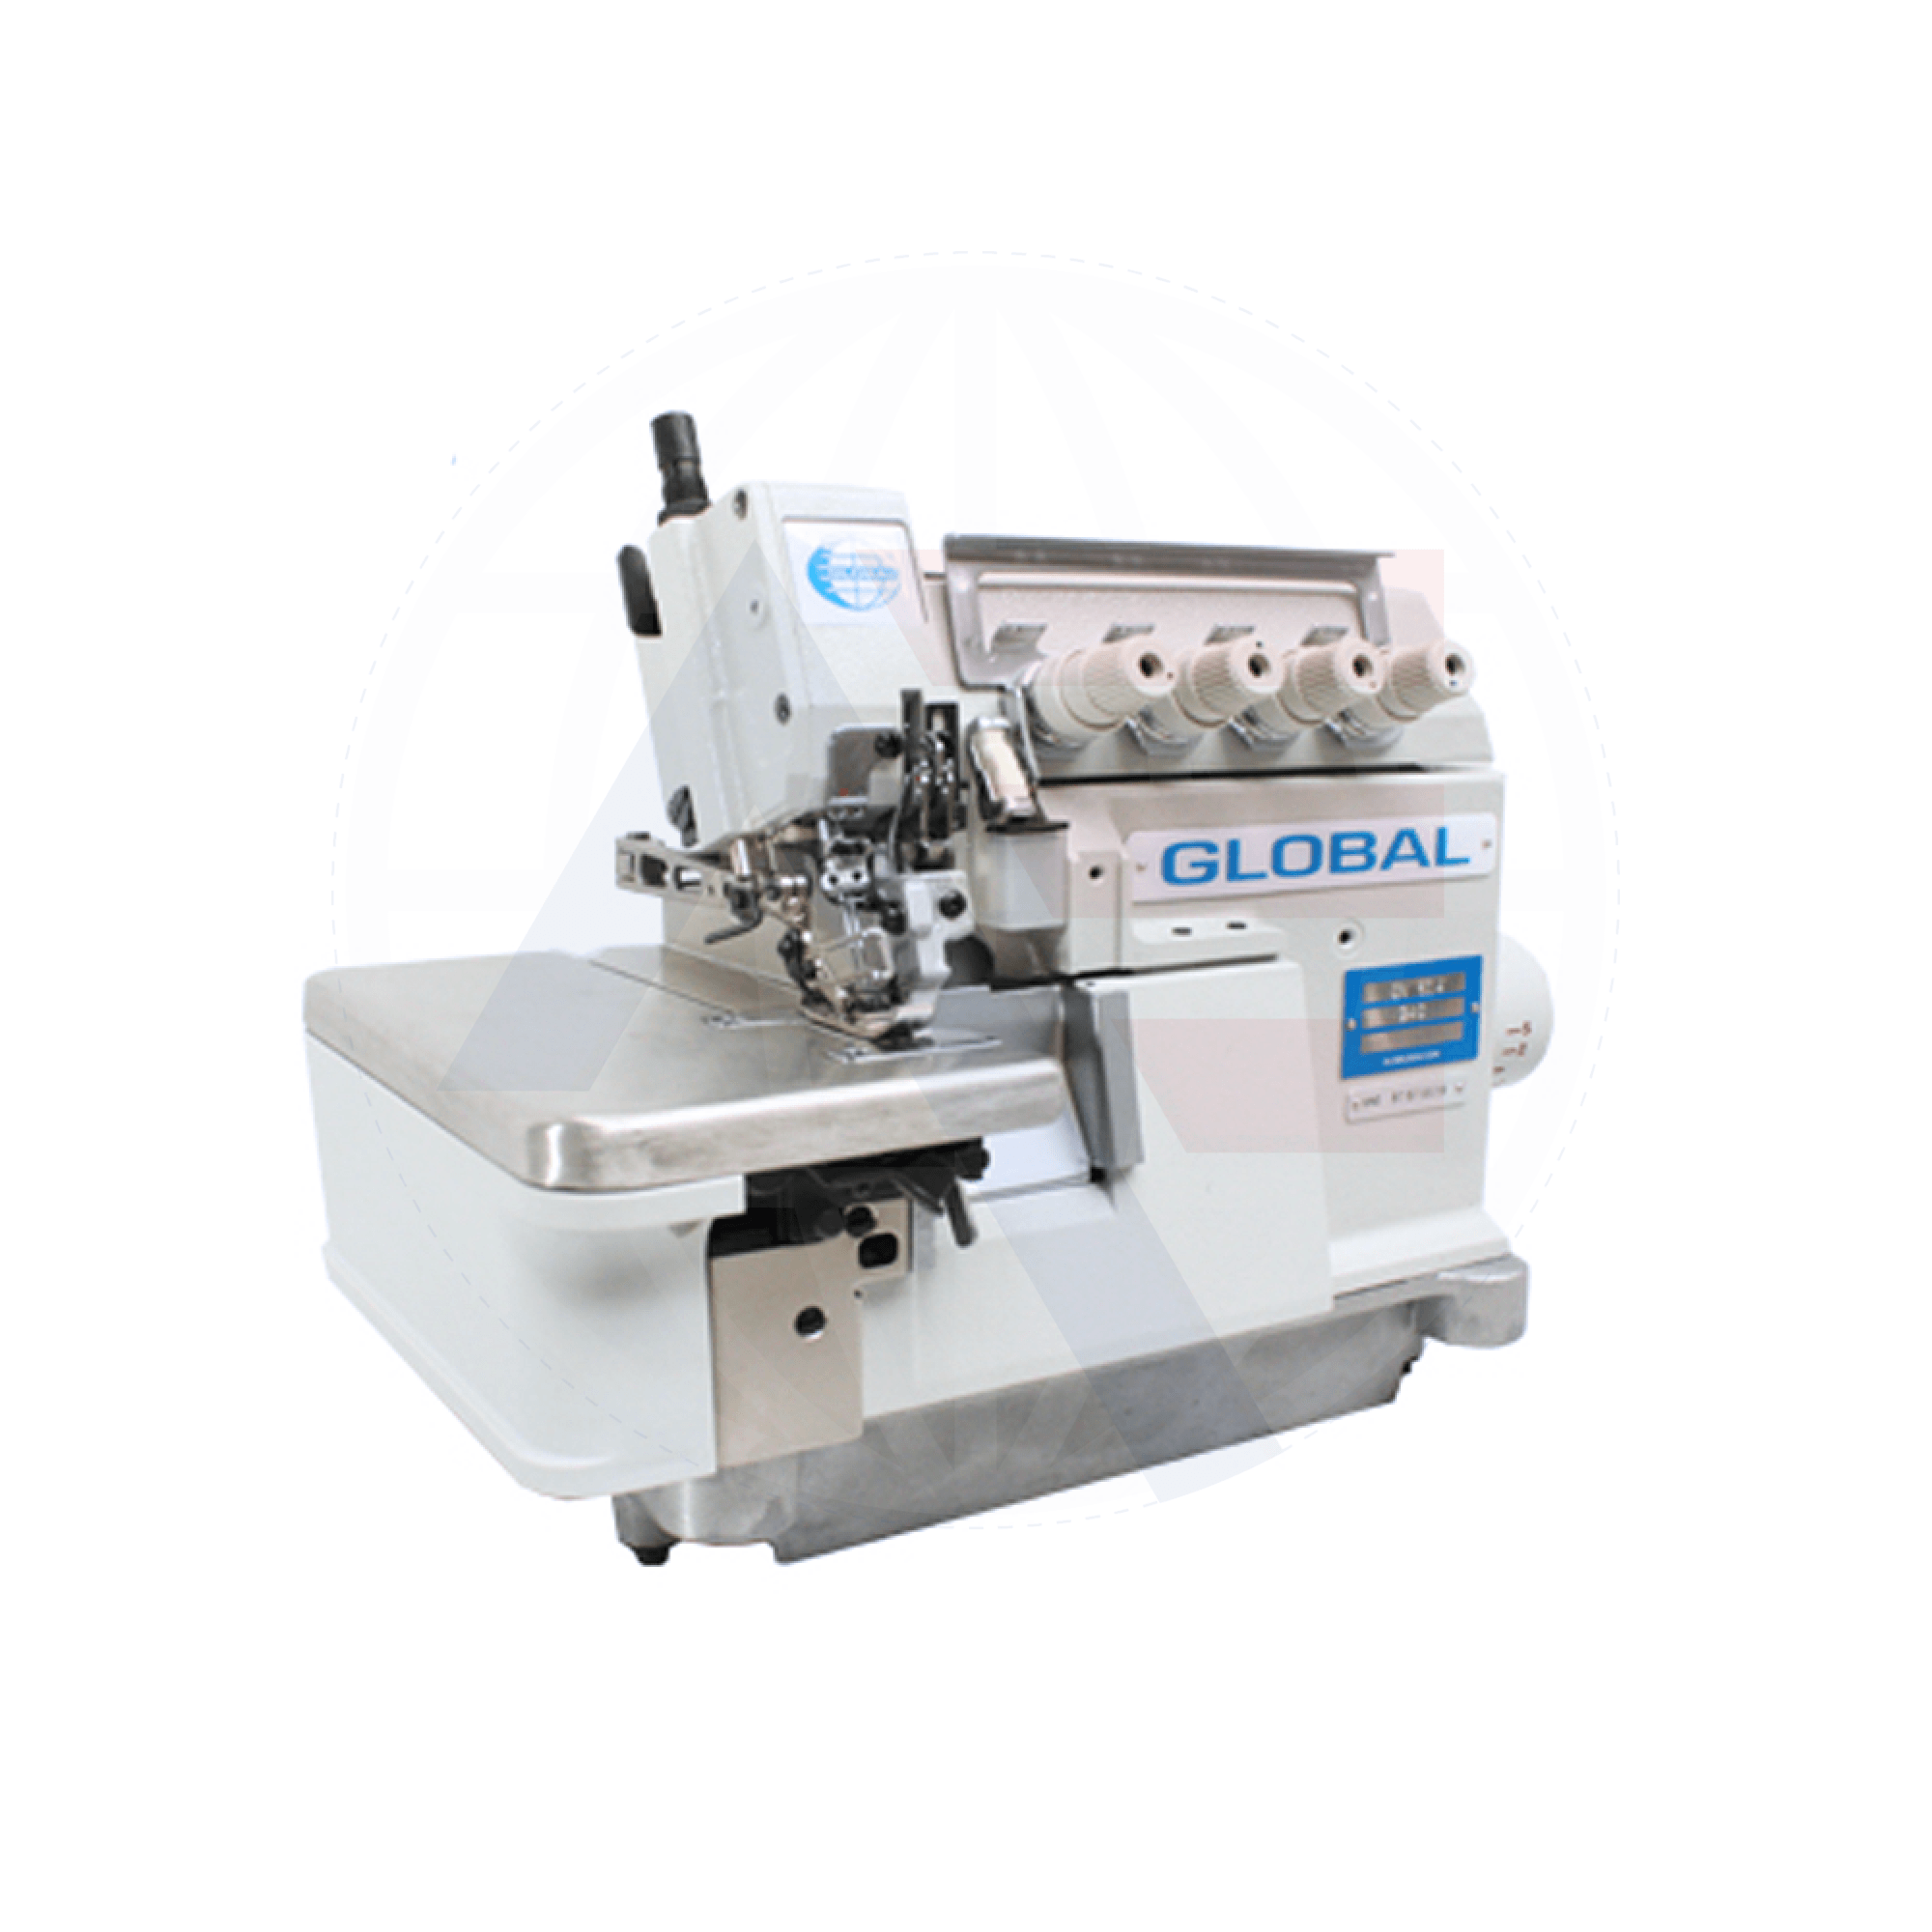 Global Ovt 500 Series Overlock Machine Sewing Machines